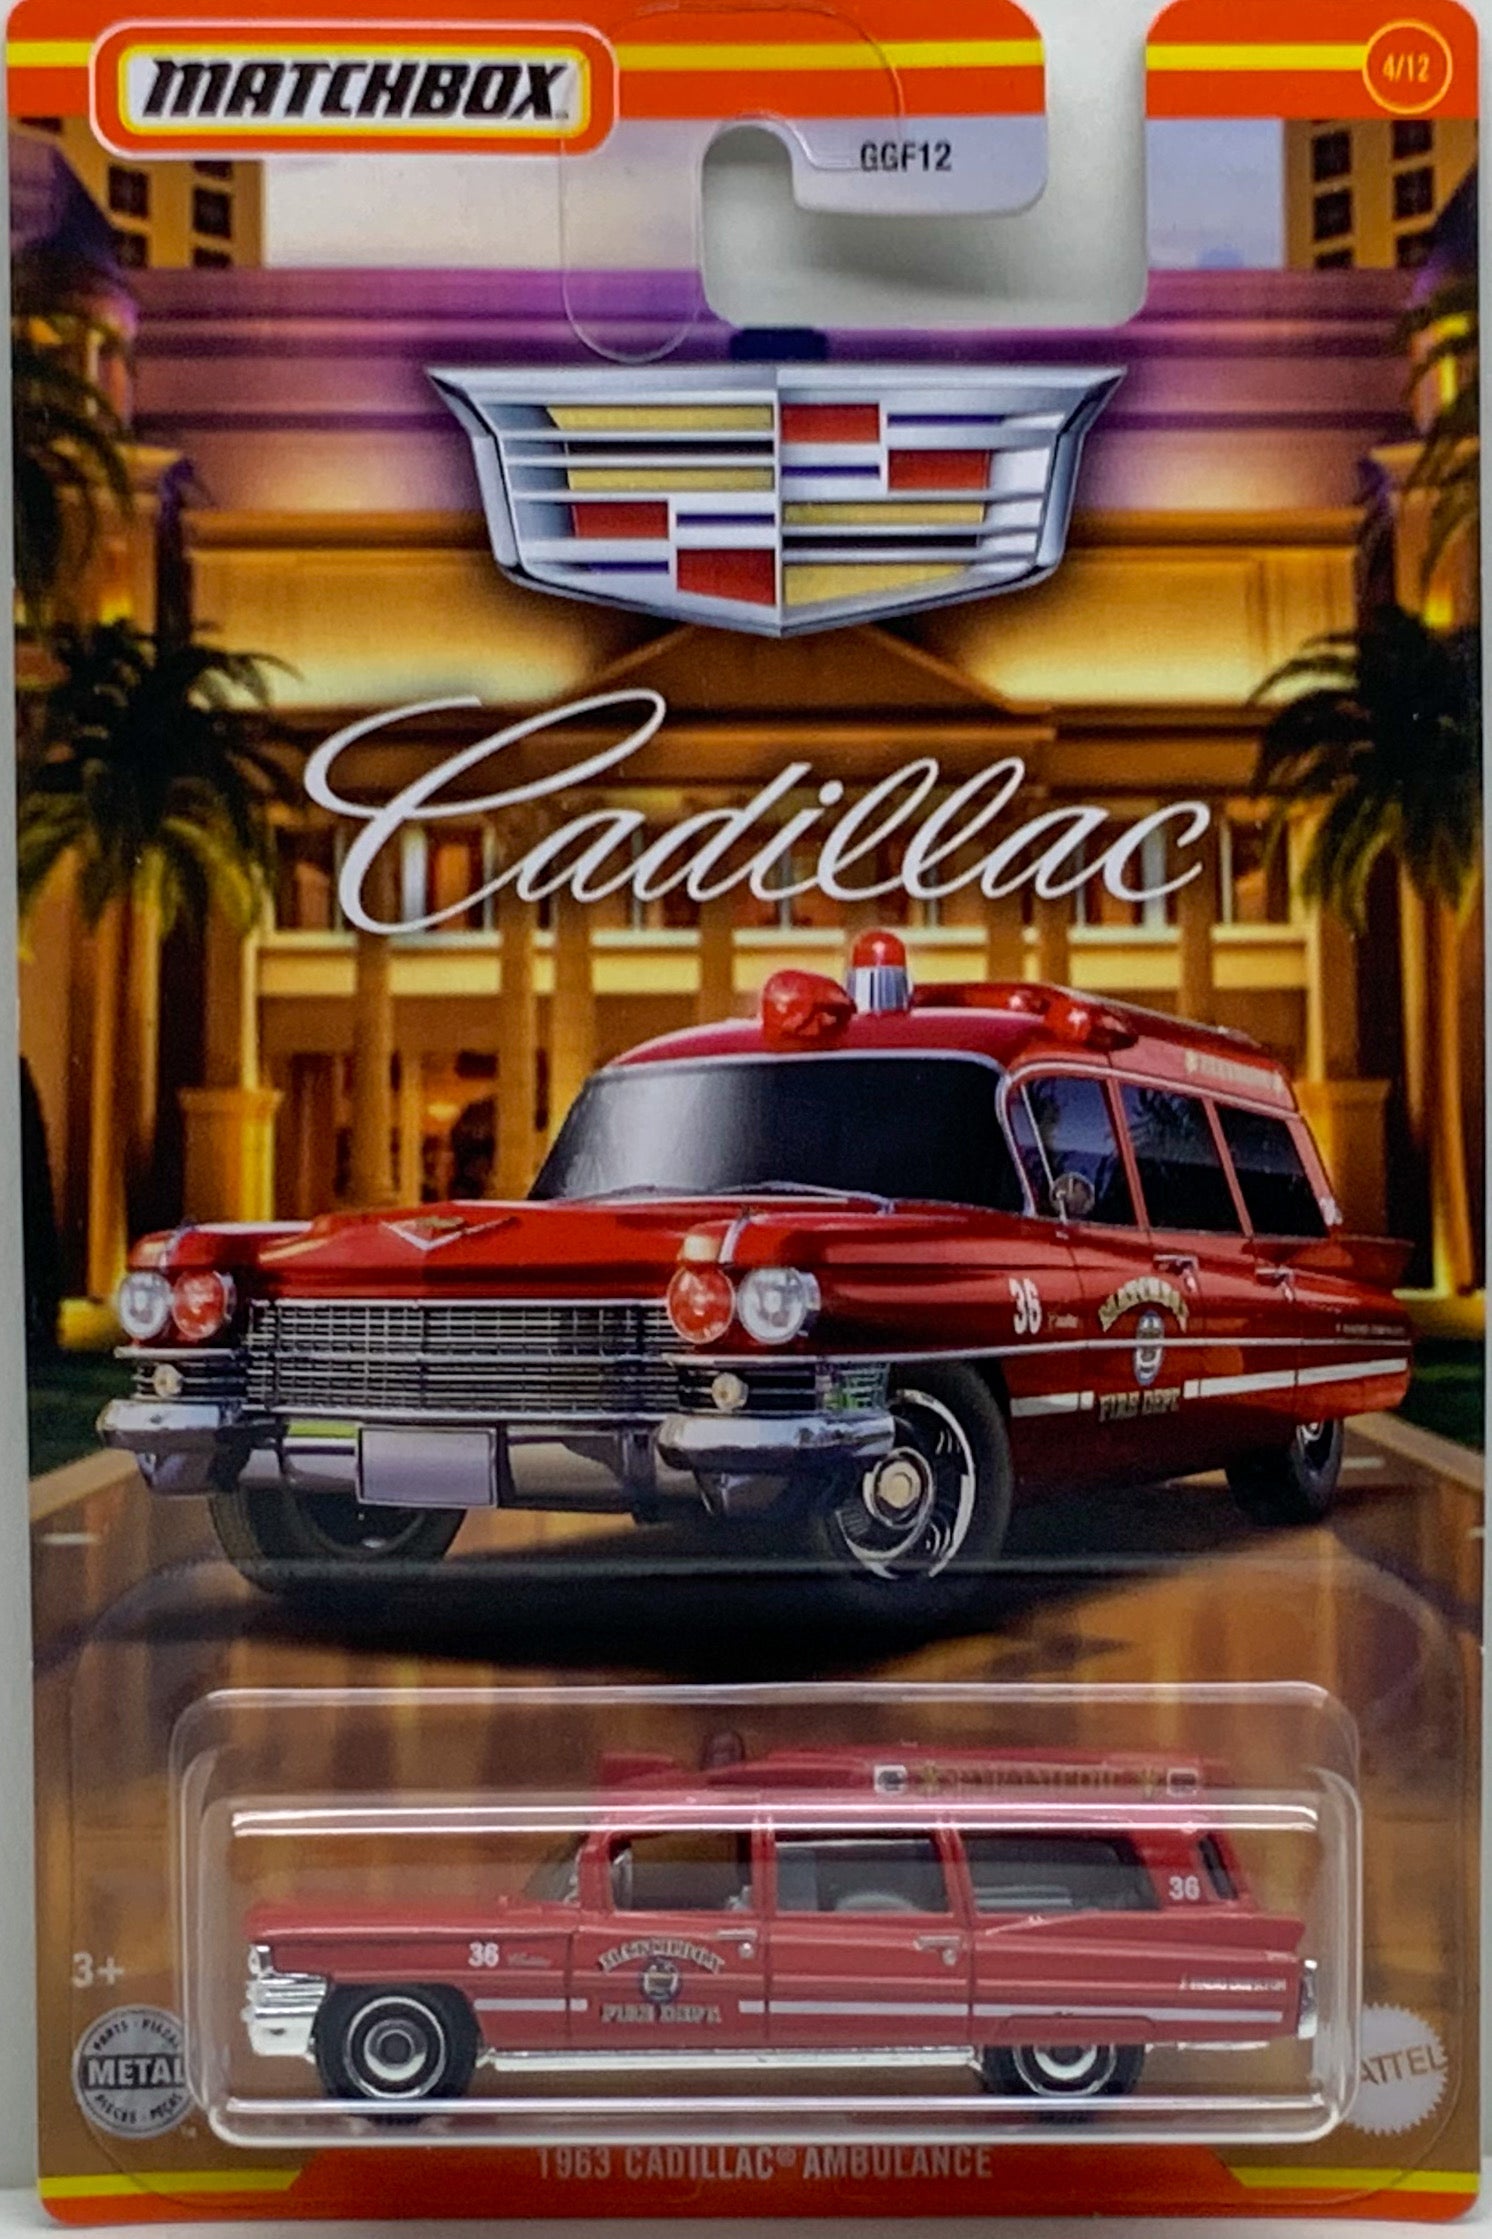 Buy at Tatoy Matchbox Cadillac Series 1963 Cadillac Ambulance Number 4 from set of 12 Mattel GGF12